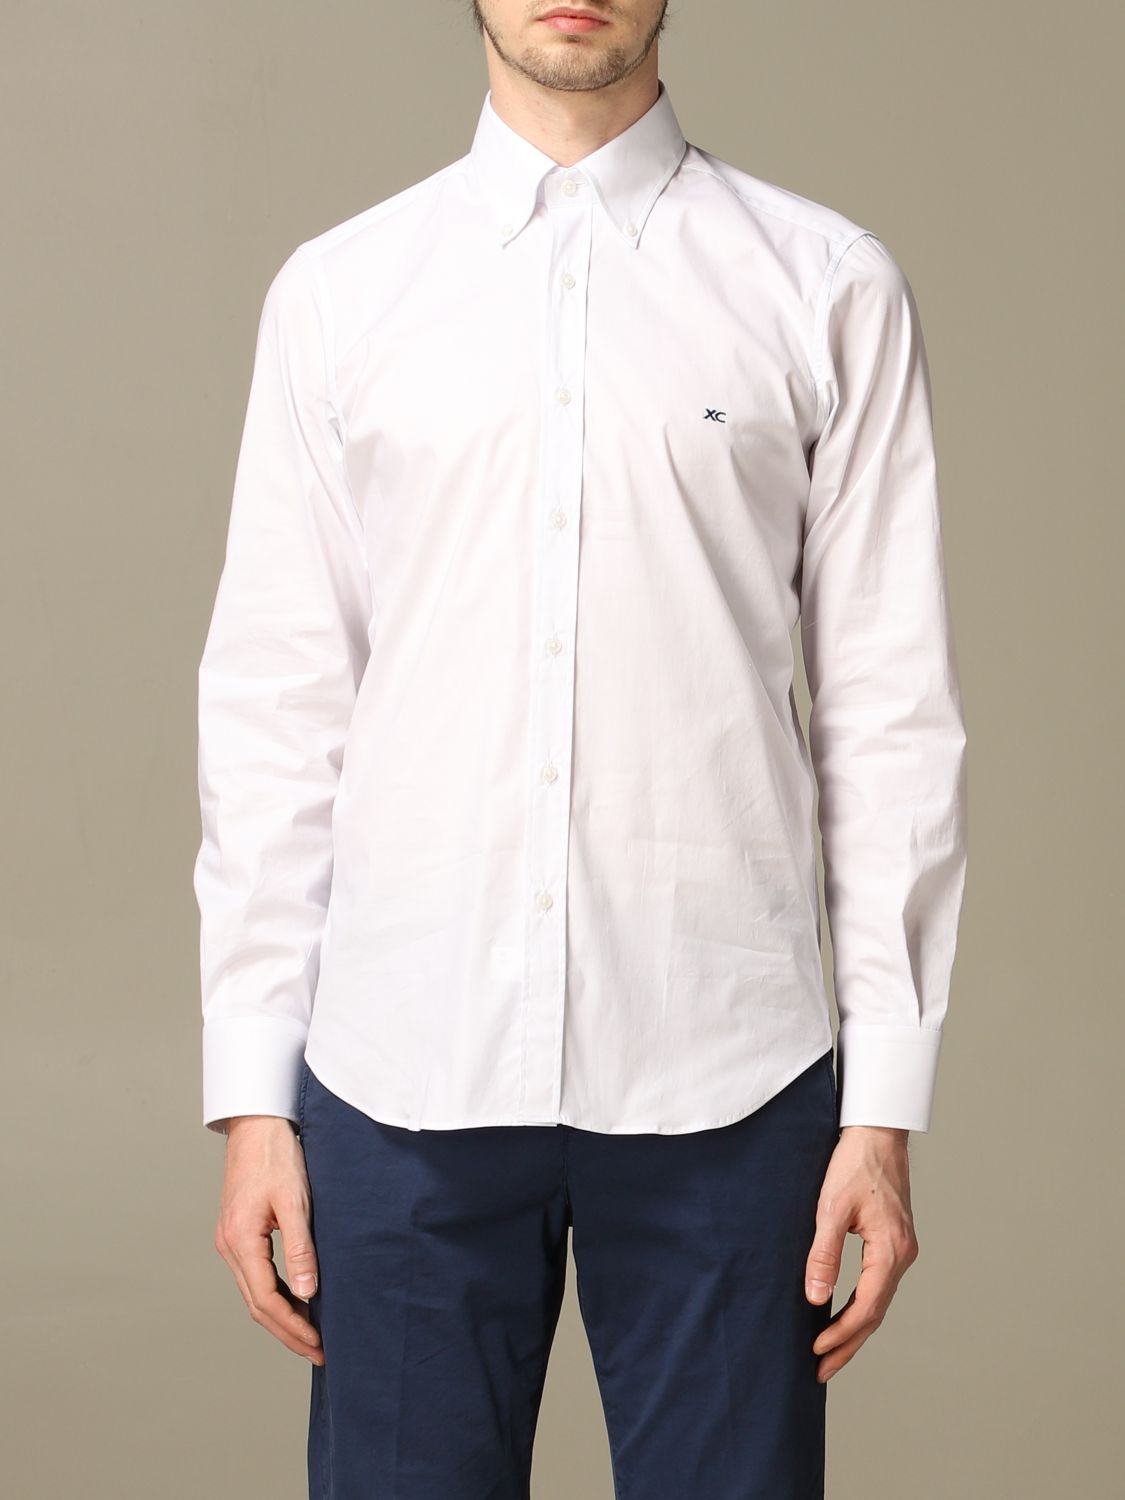 Xc Outlet: shirt in slim stretch cotton - White | Xc shirt DV2 XD CM04